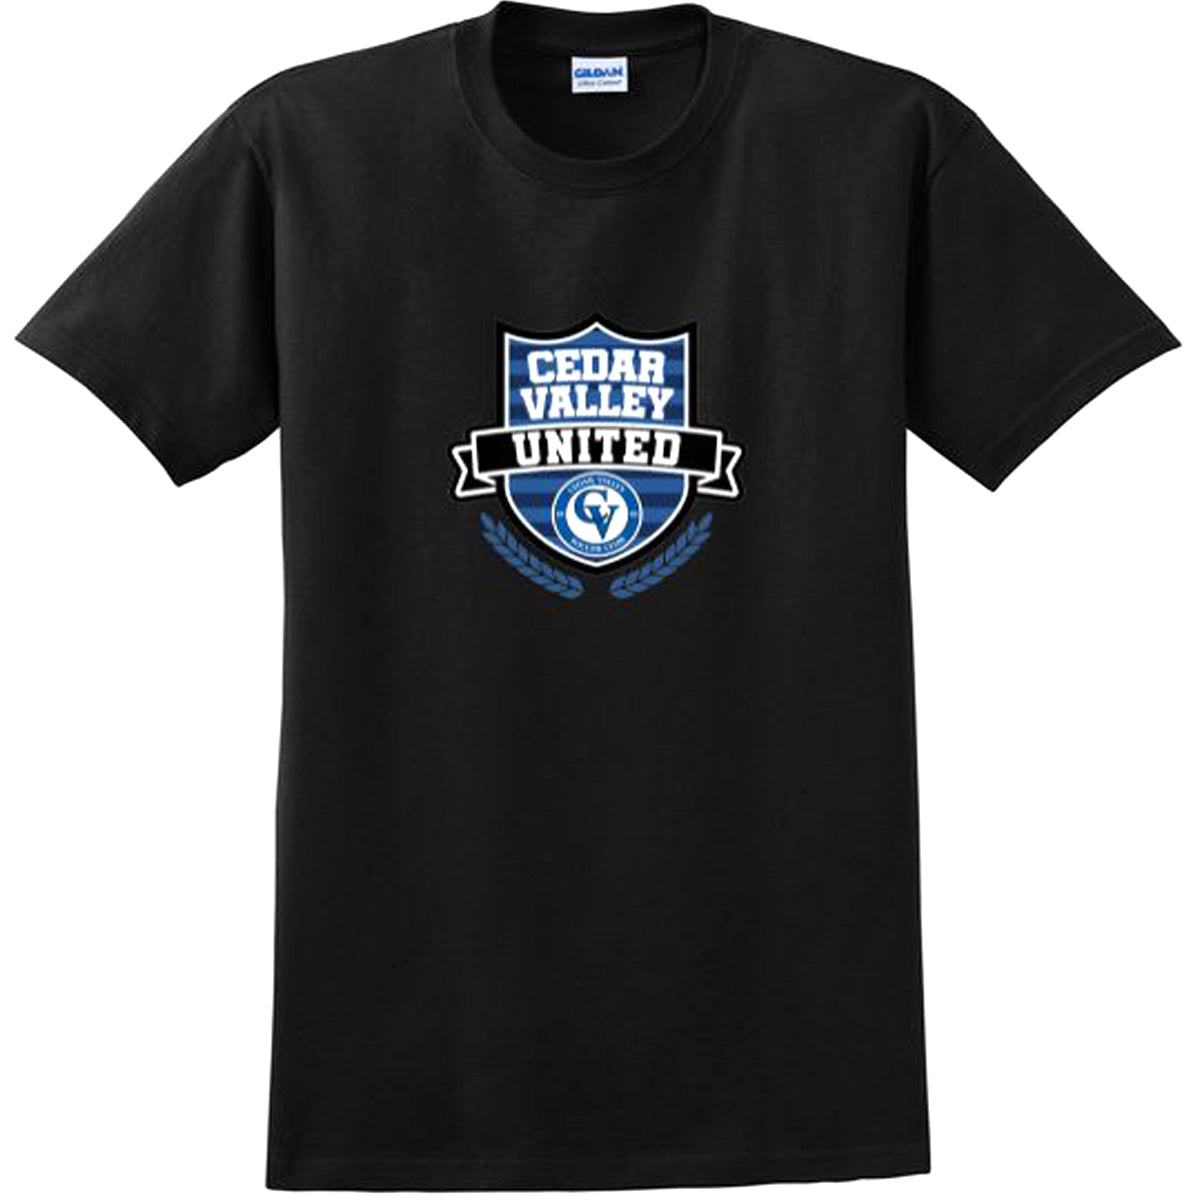 Cedar Valley Soccer Club Ultra Cotton 100% Cotton T-Shirt Sweatshirt Gildan Men's Small Black 